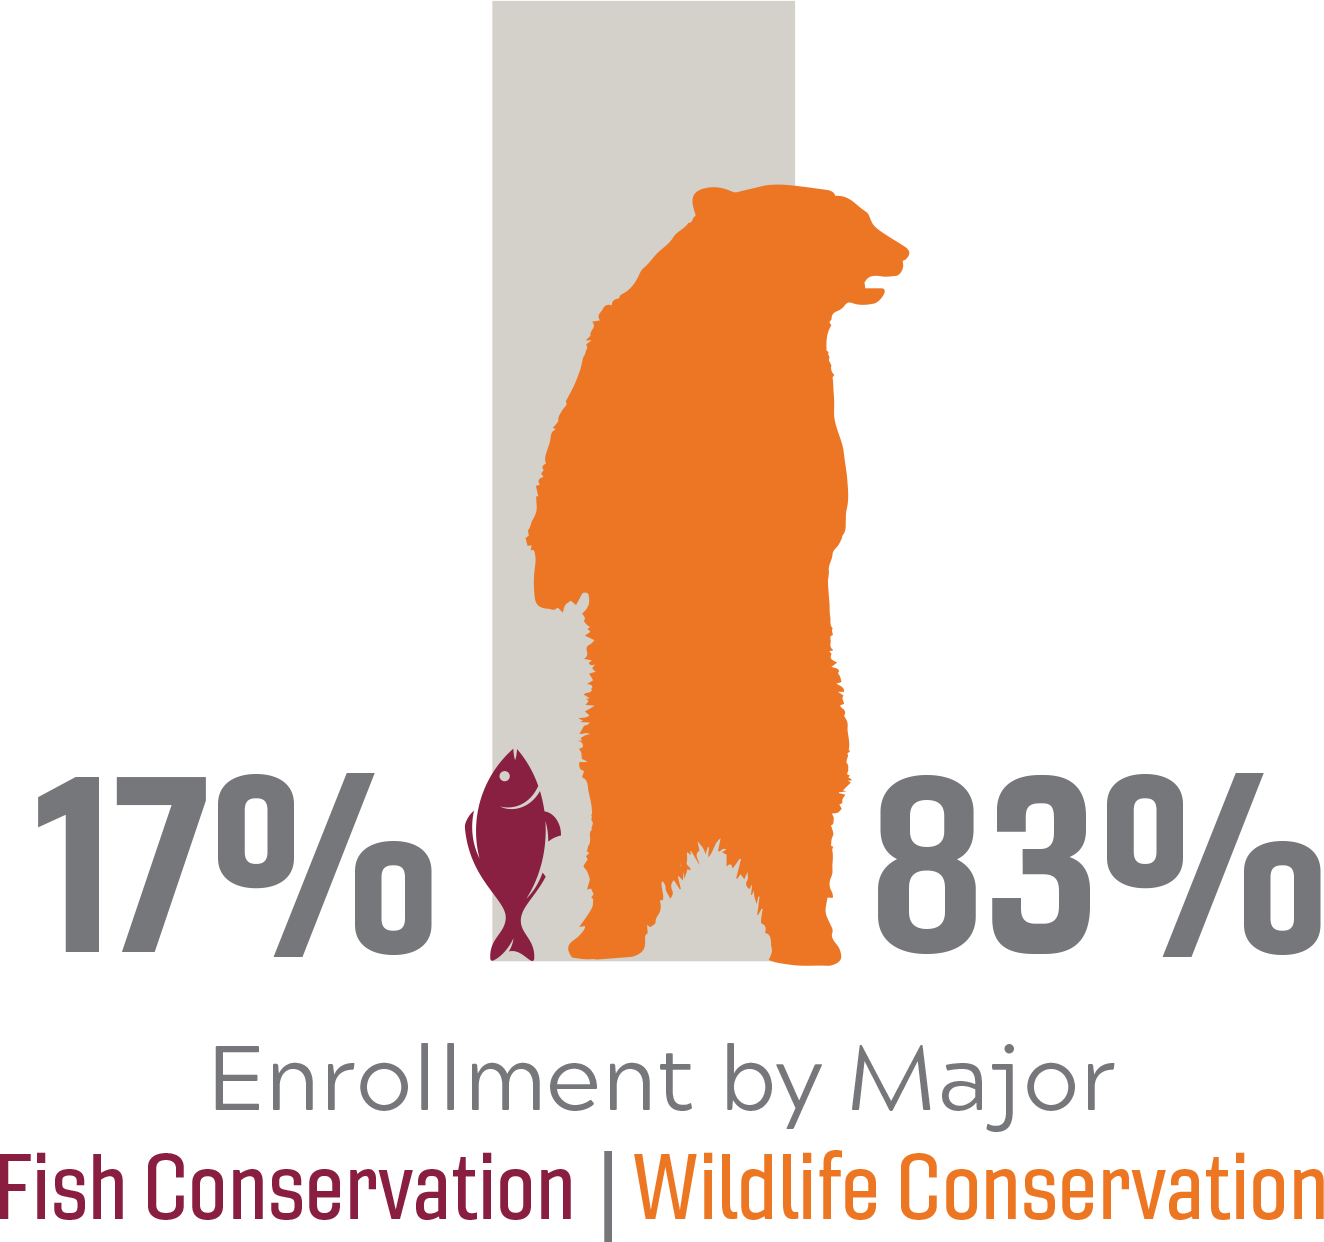 Enrollment by Major: 17% Fish Conservation, 83% Wildlife Conservation.